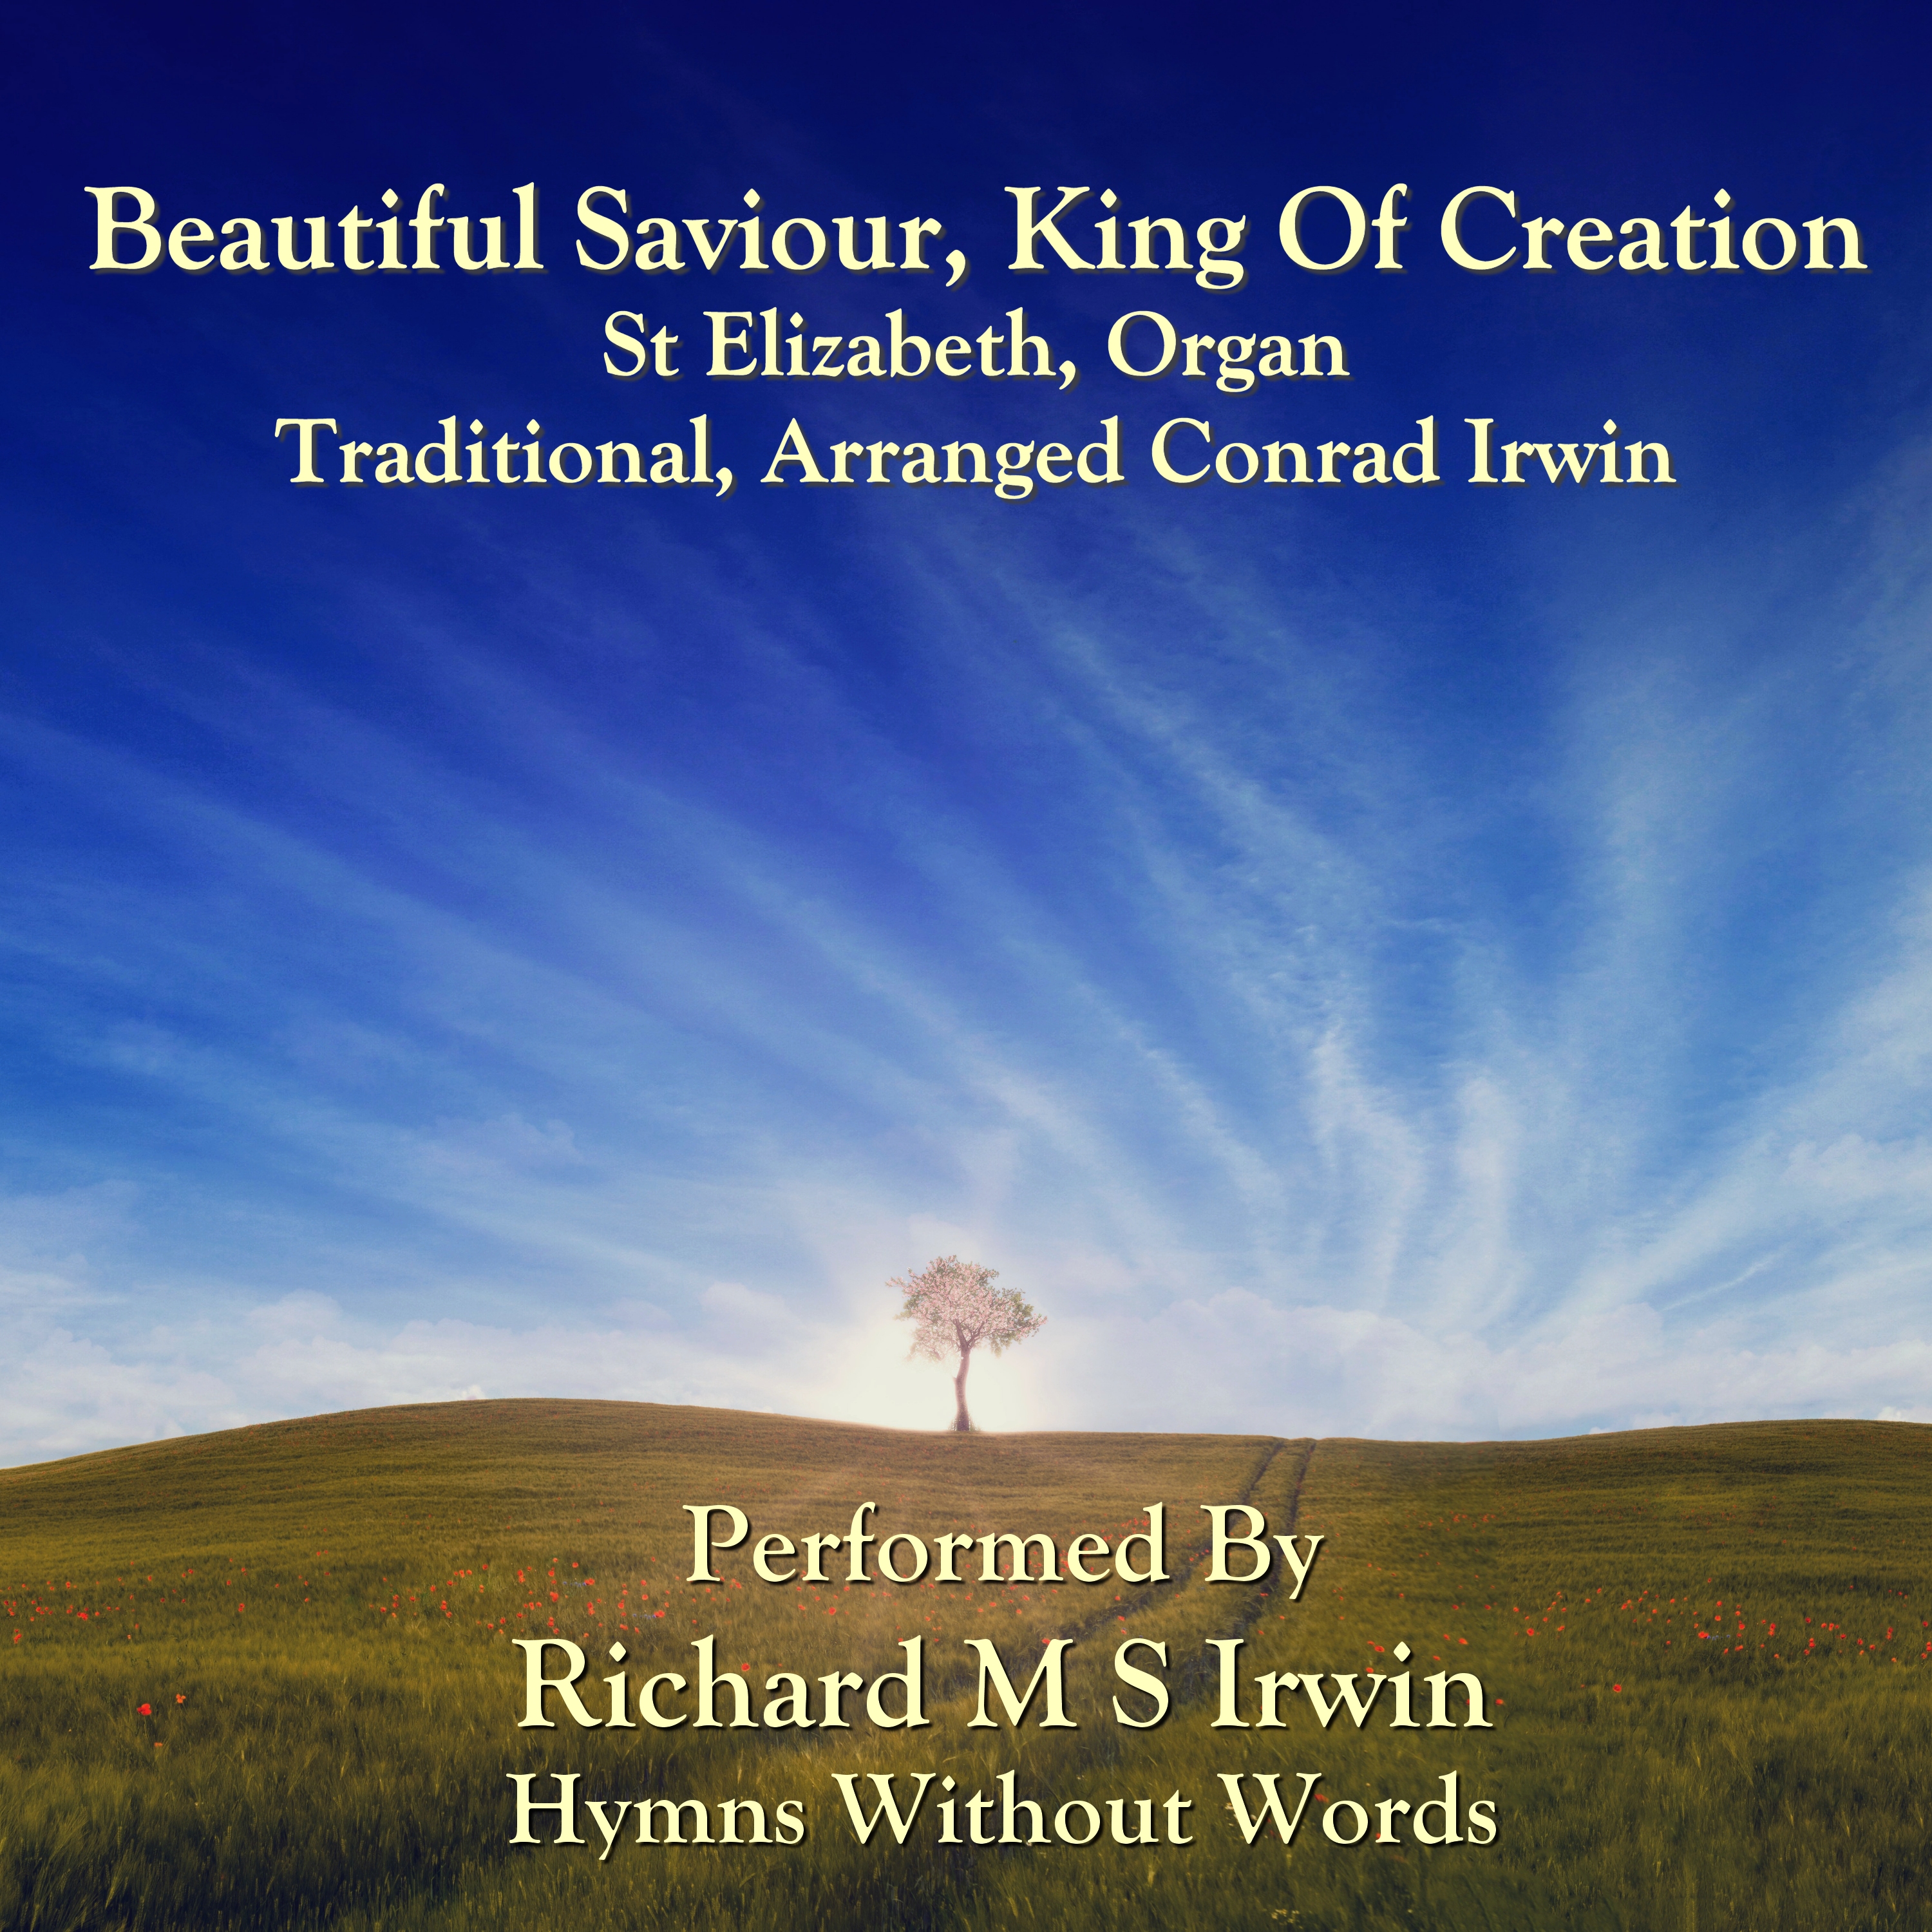 Beautiful Saviour King Of Creation (St Elizabeth, Organ, 4 Verses)